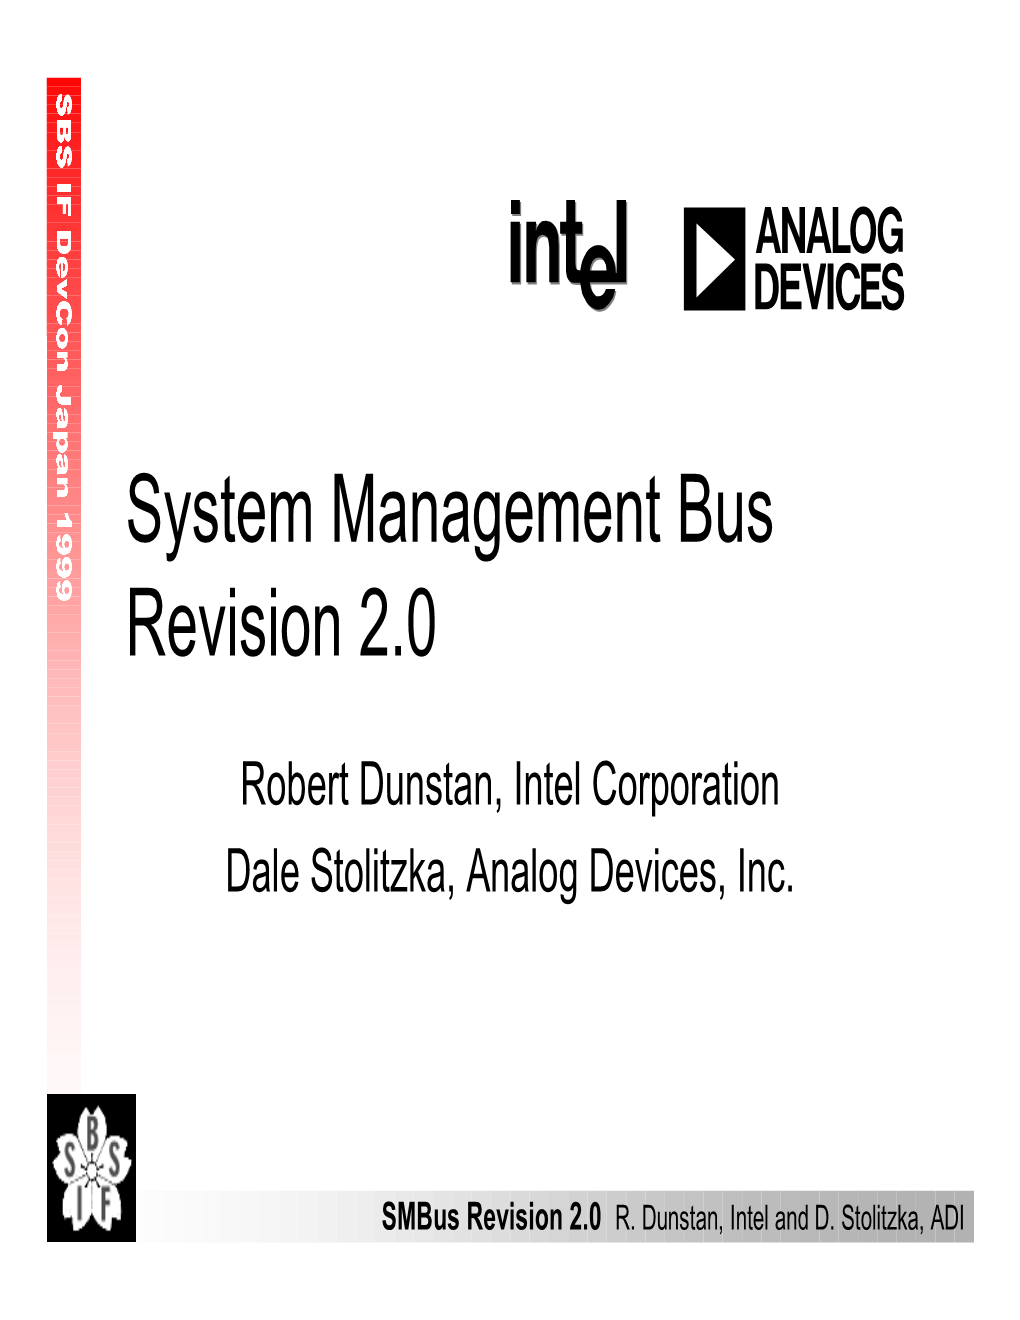 System Management Bus Revision 2.0